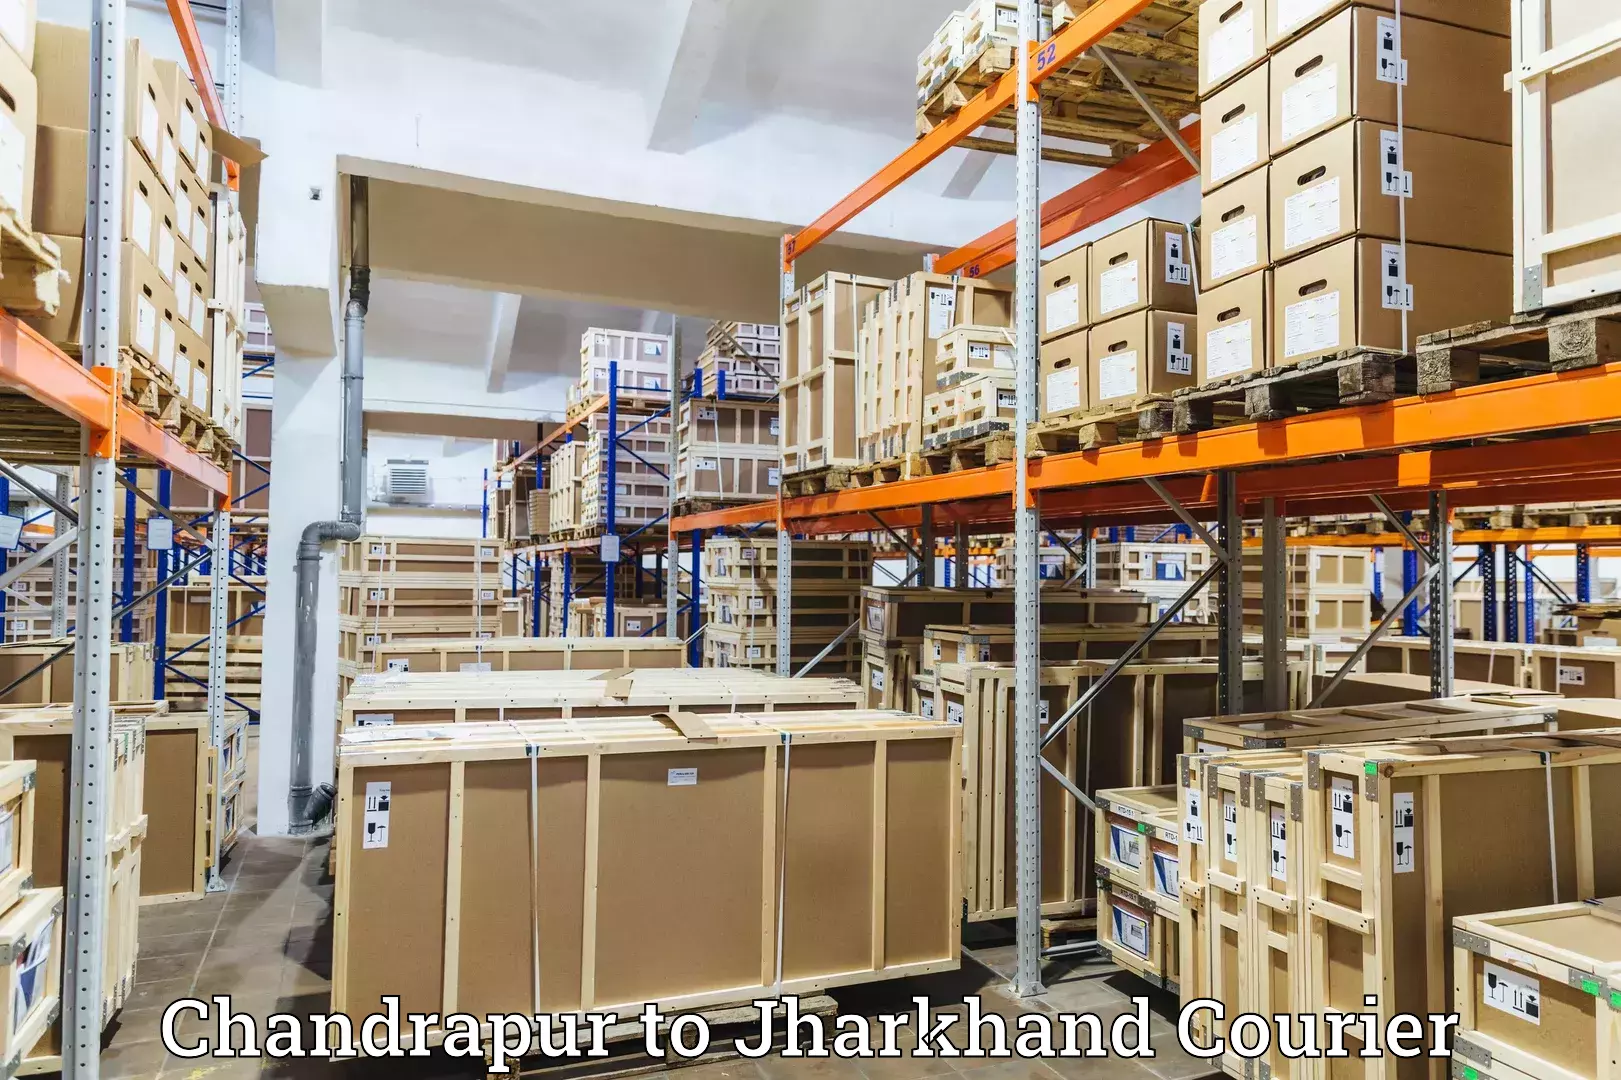 Global logistics network Chandrapur to Latehar